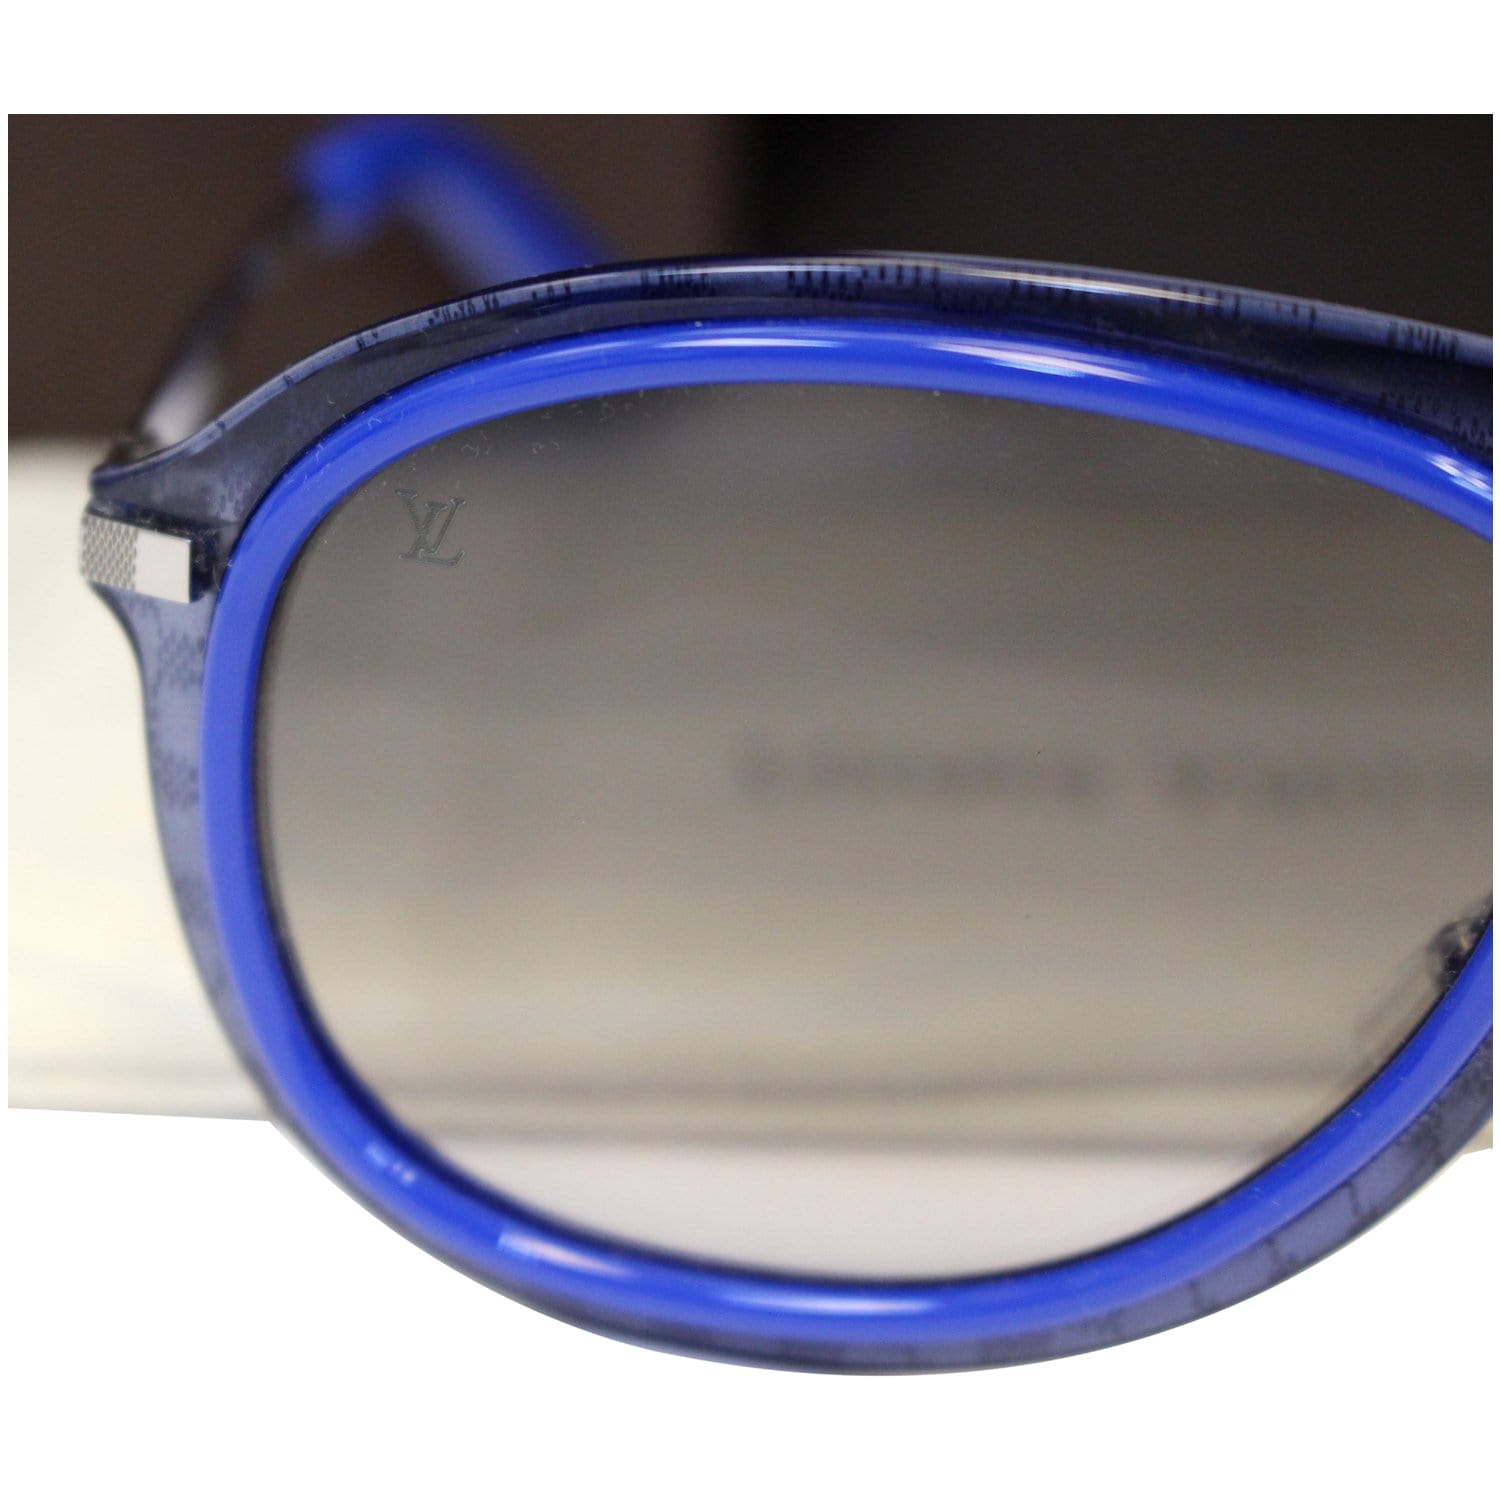 Louis Vuitton Blue Acetate Frame Attirance Sunglasses Z0431W